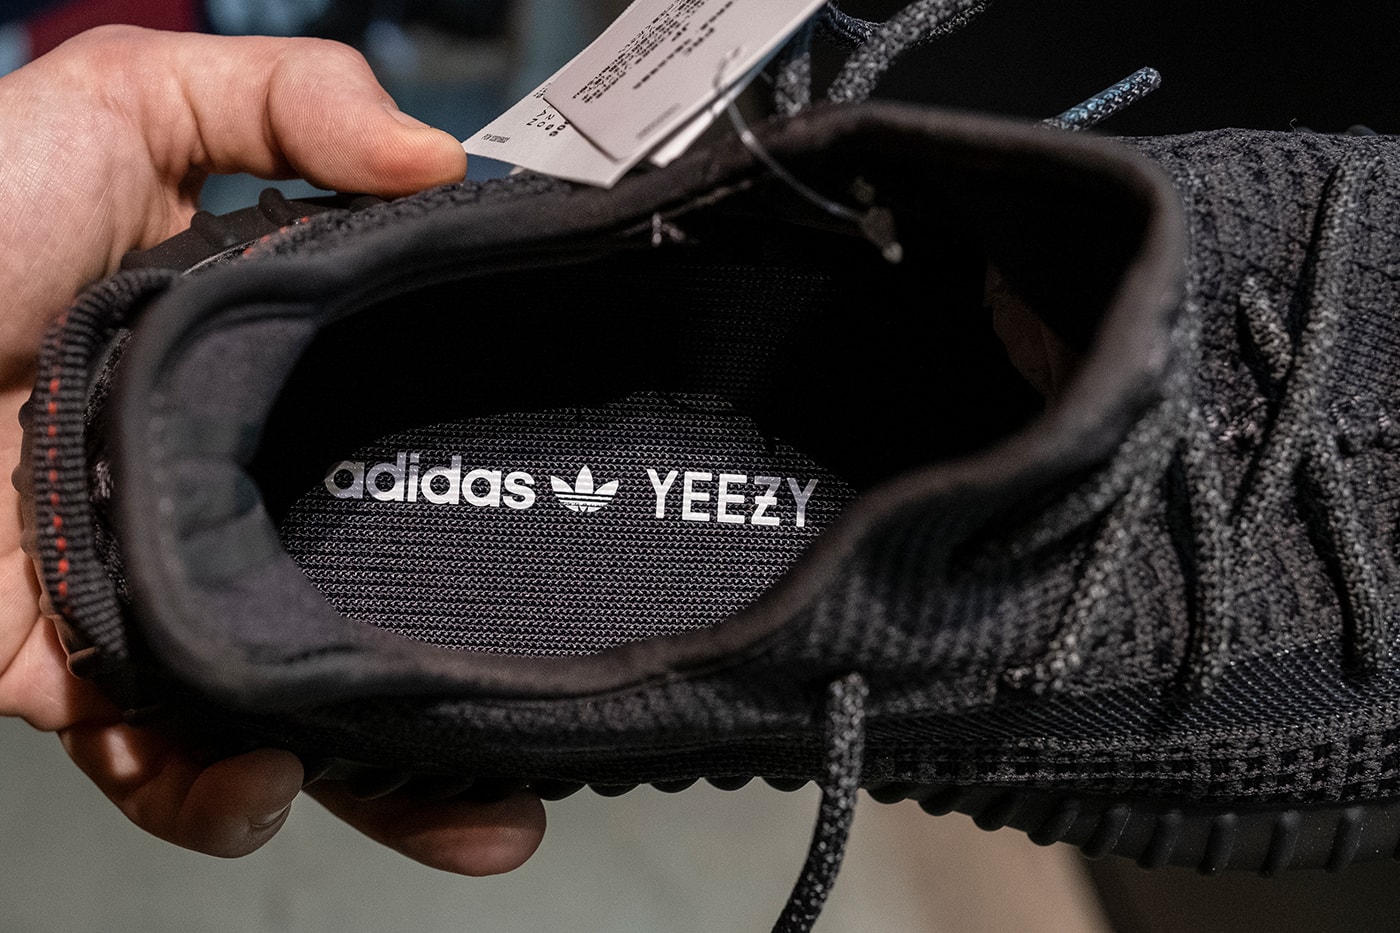 YEEZY Footwear Manufacturer Okabashi Employee Firing Info Kanye West Okabashi